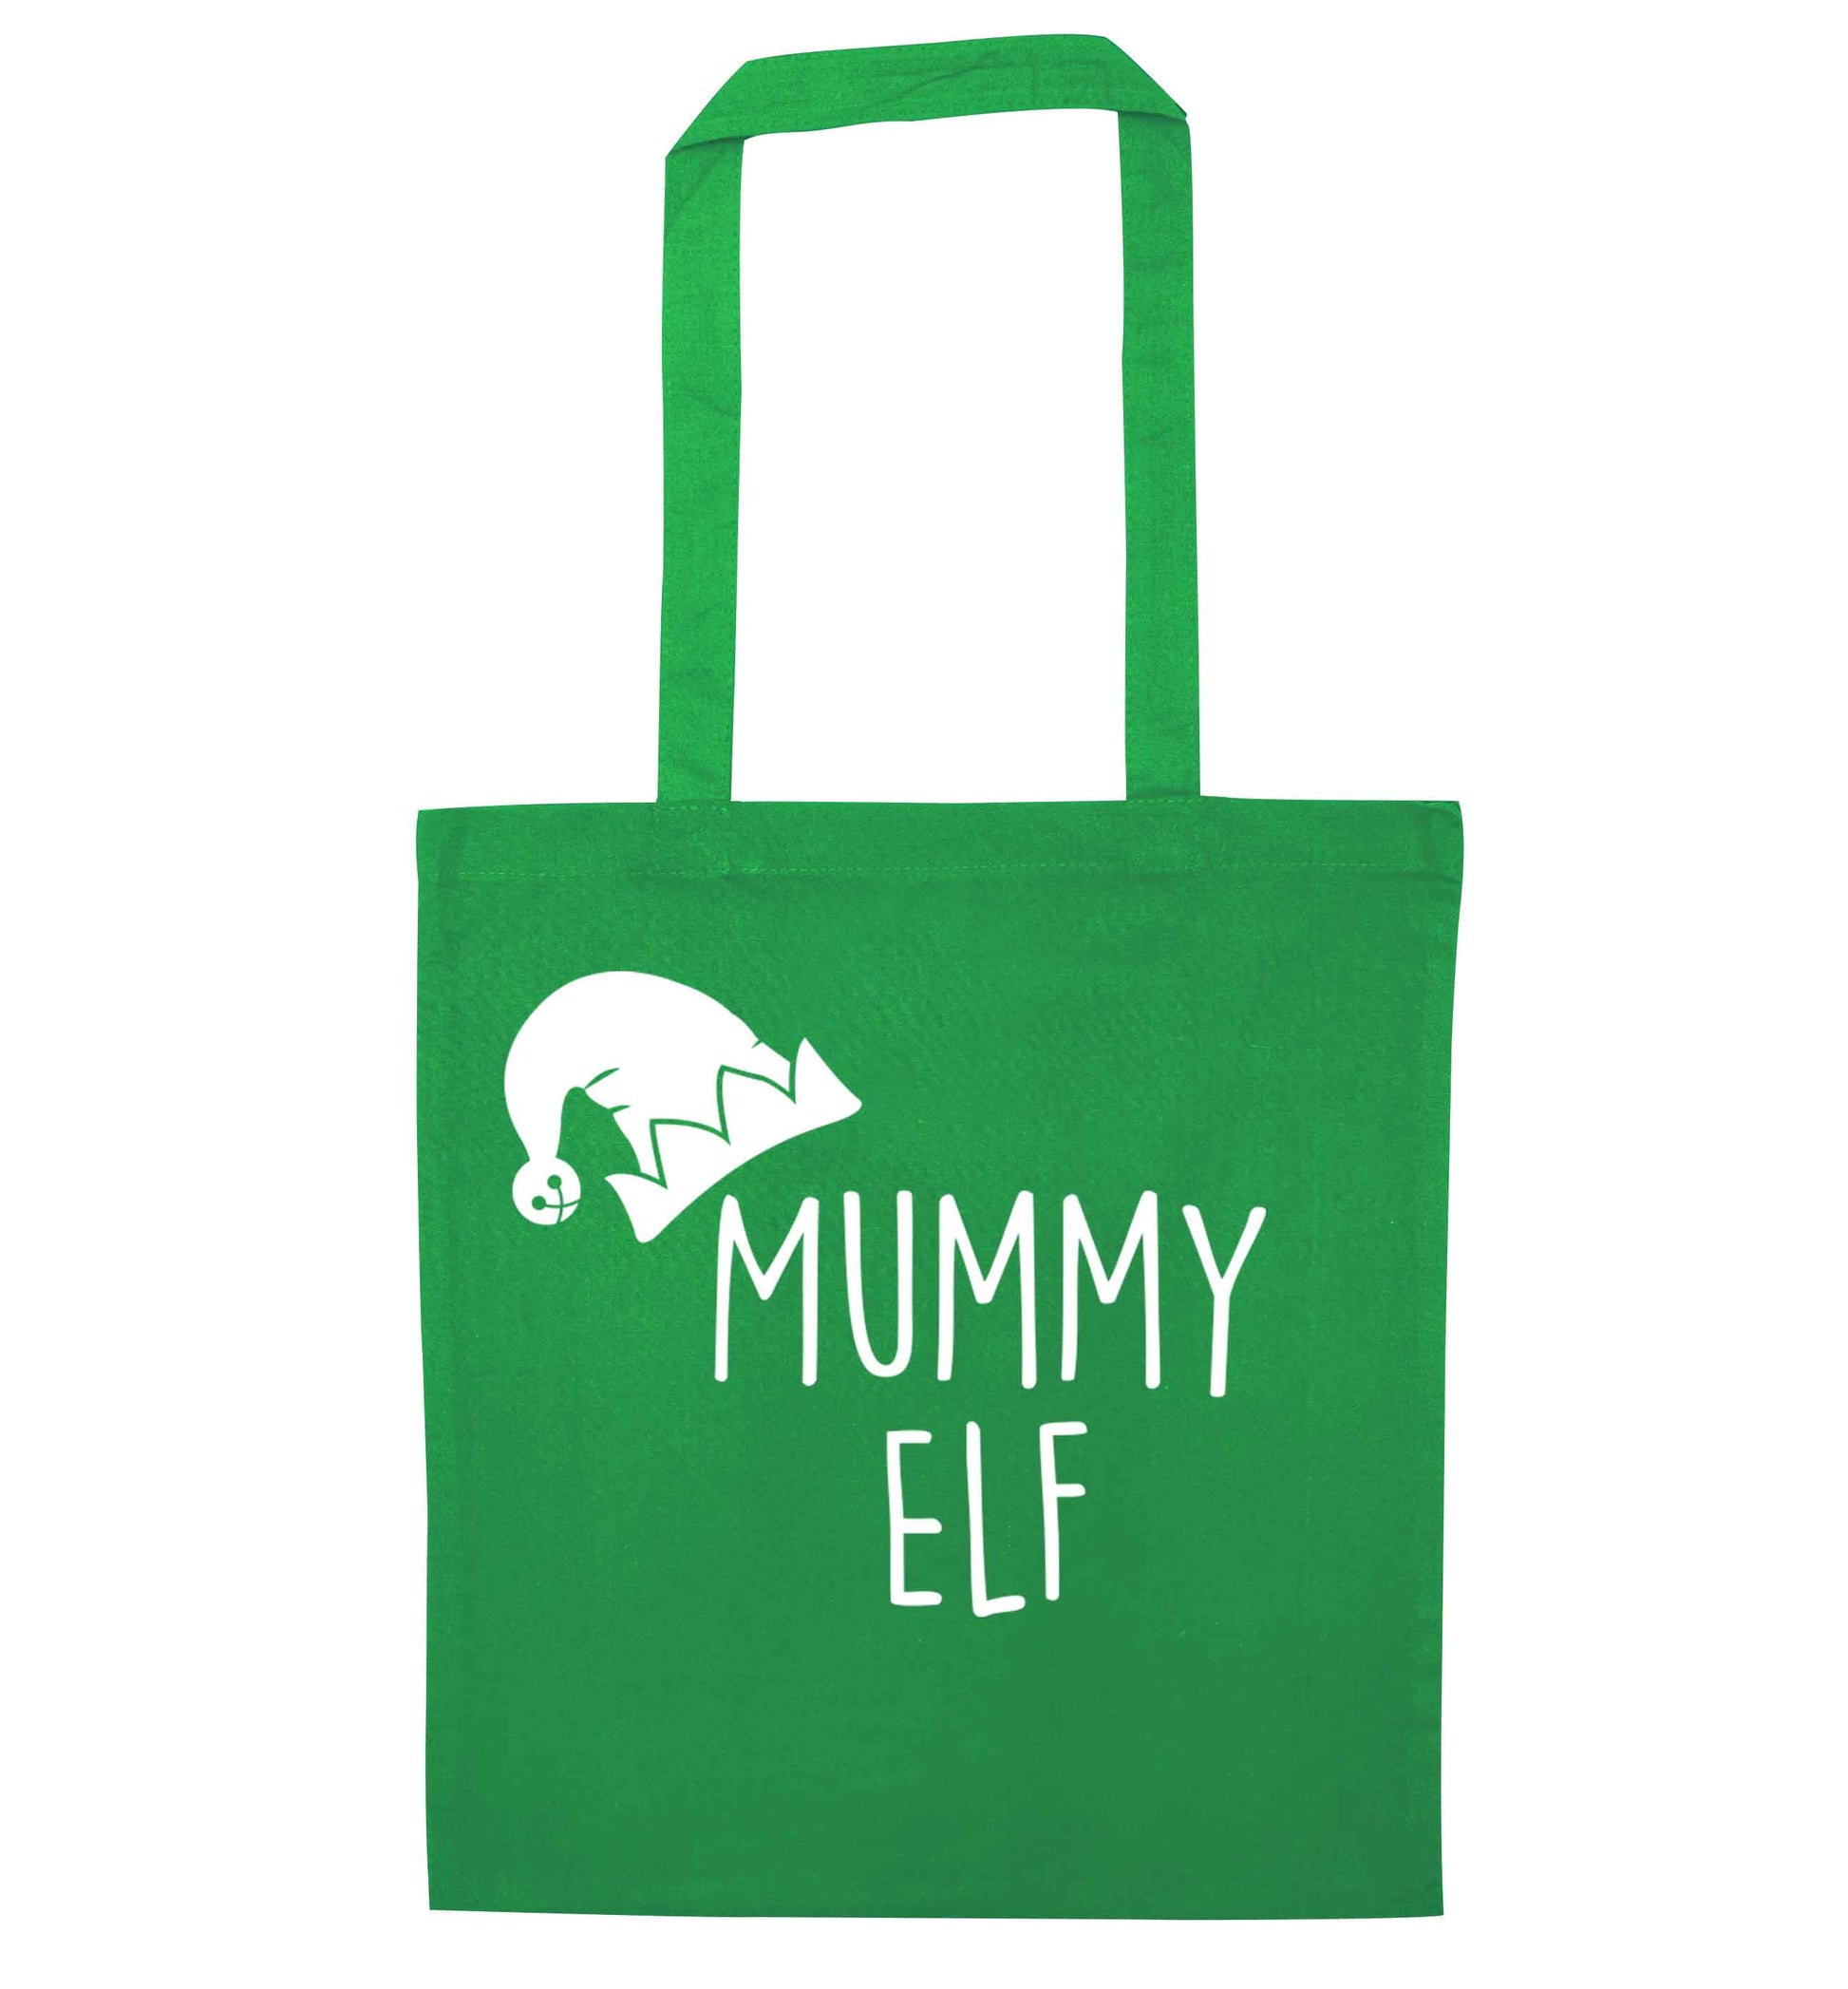 Mummy elf green tote bag